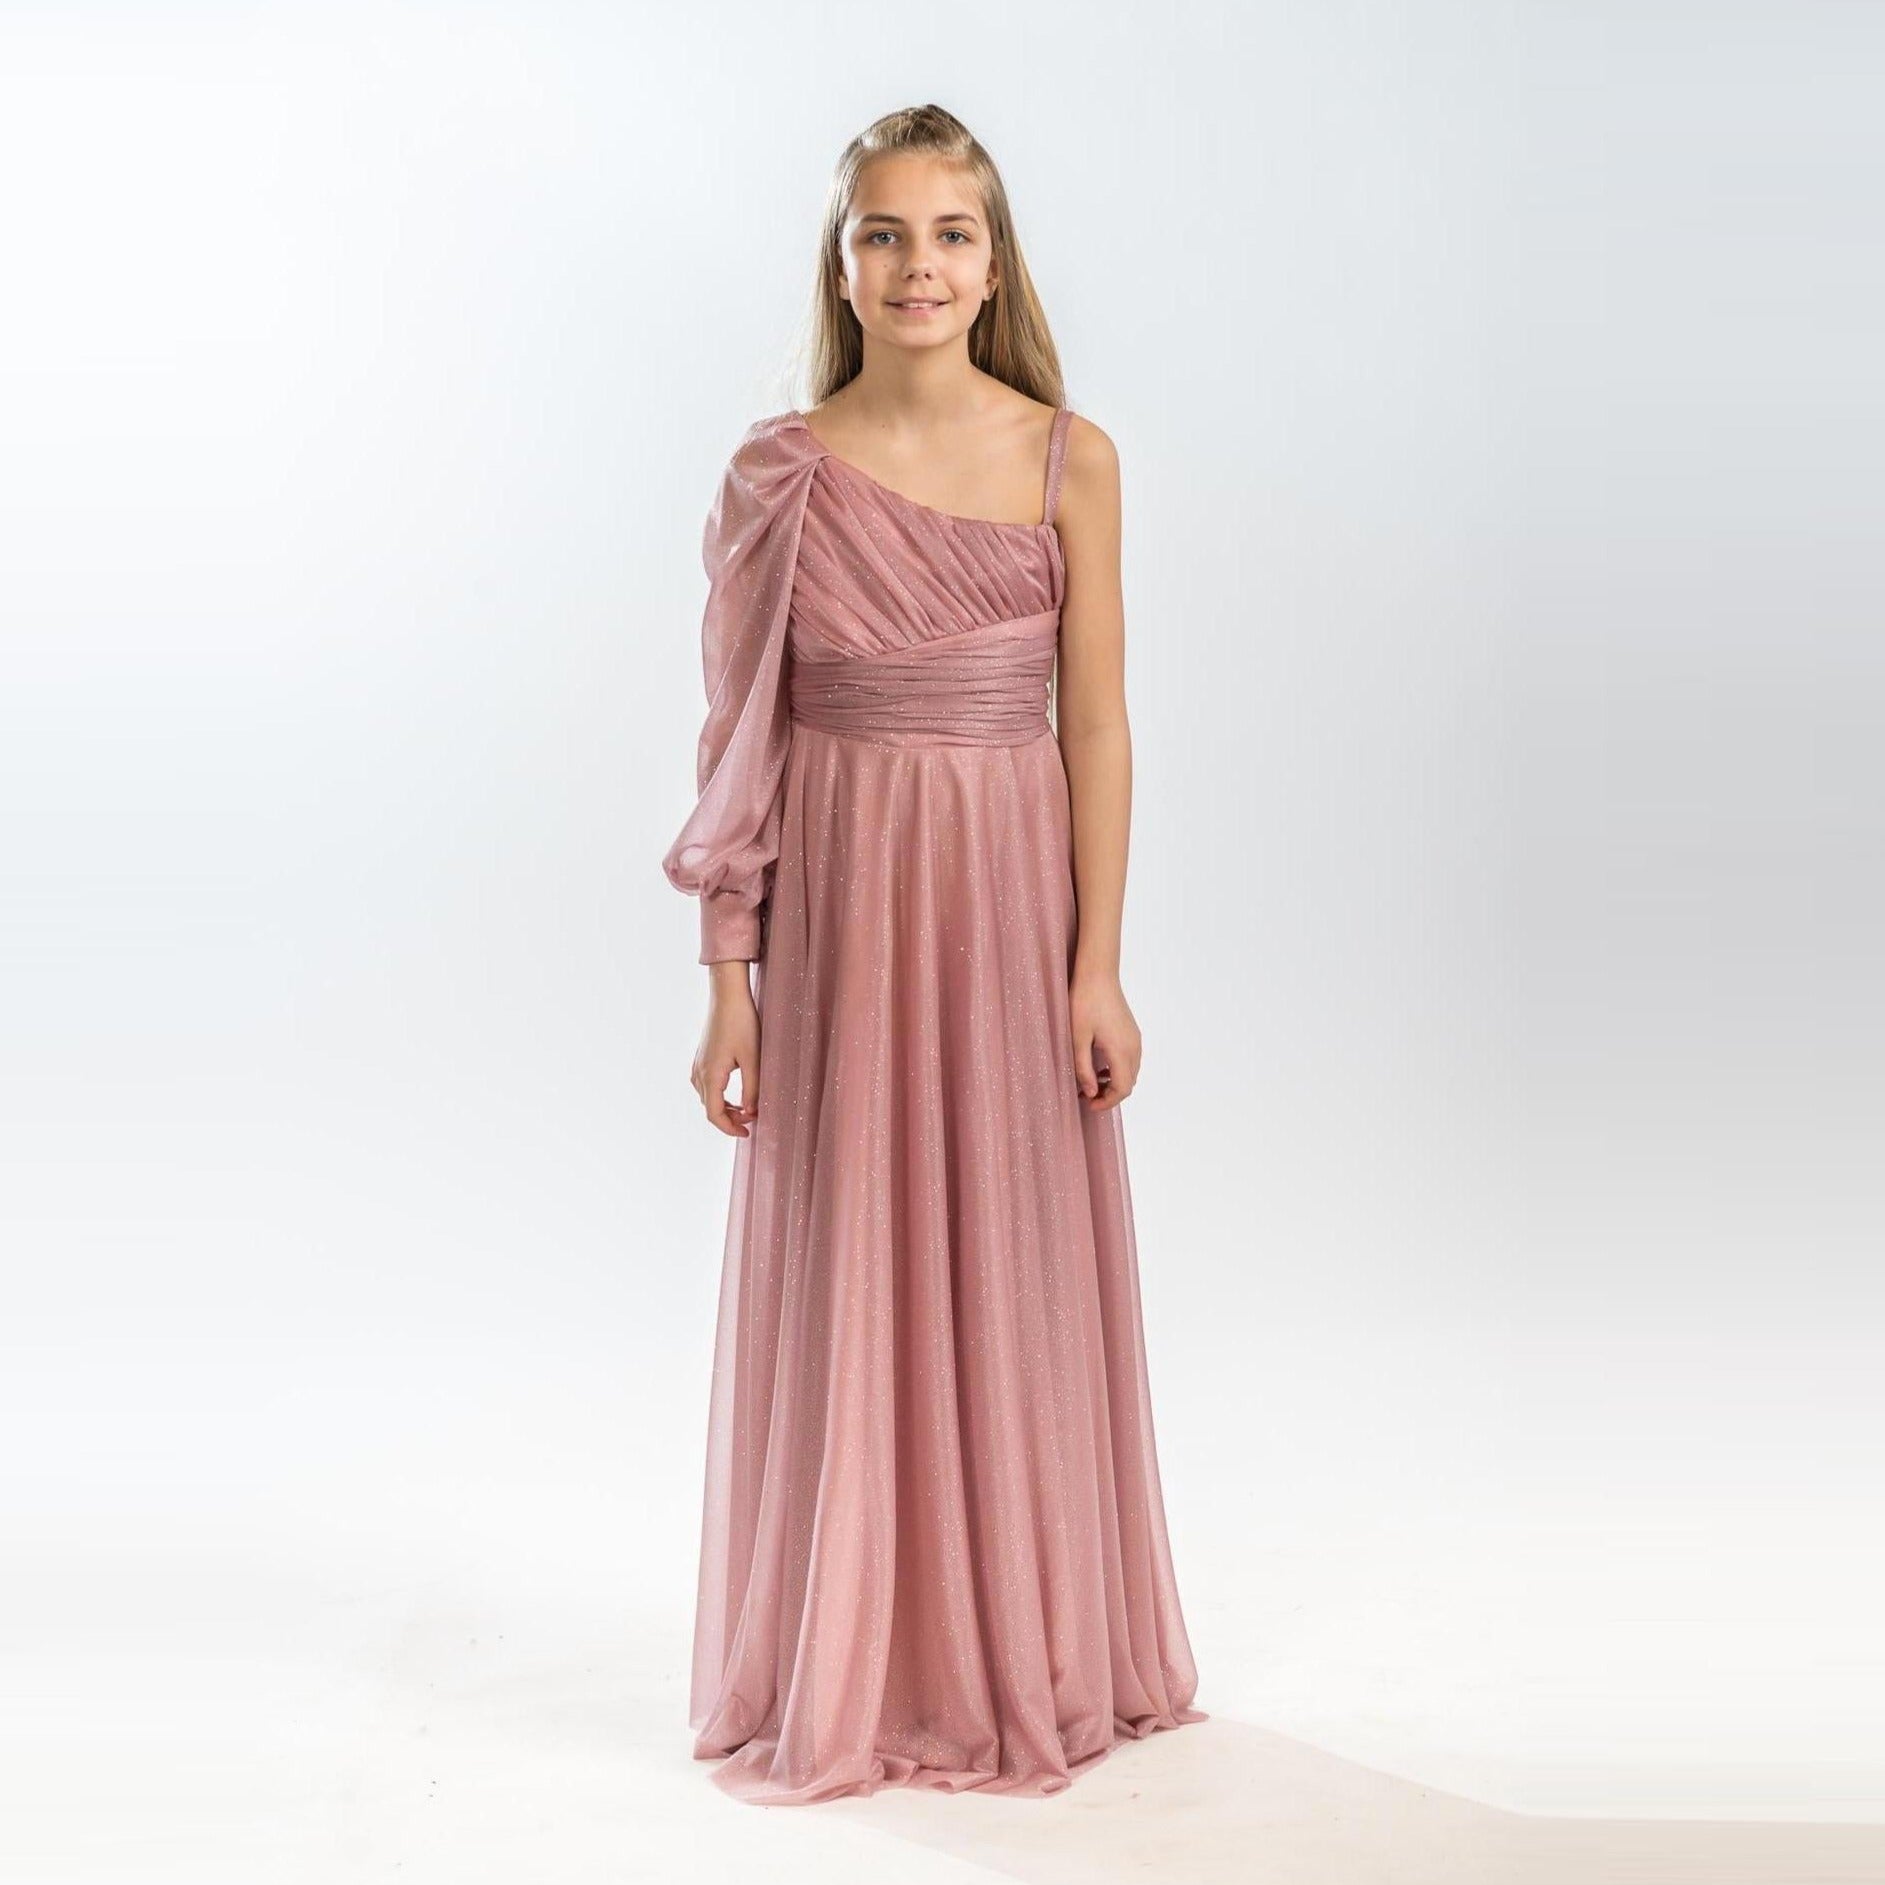 Elegant Emma Girls Formal Dress